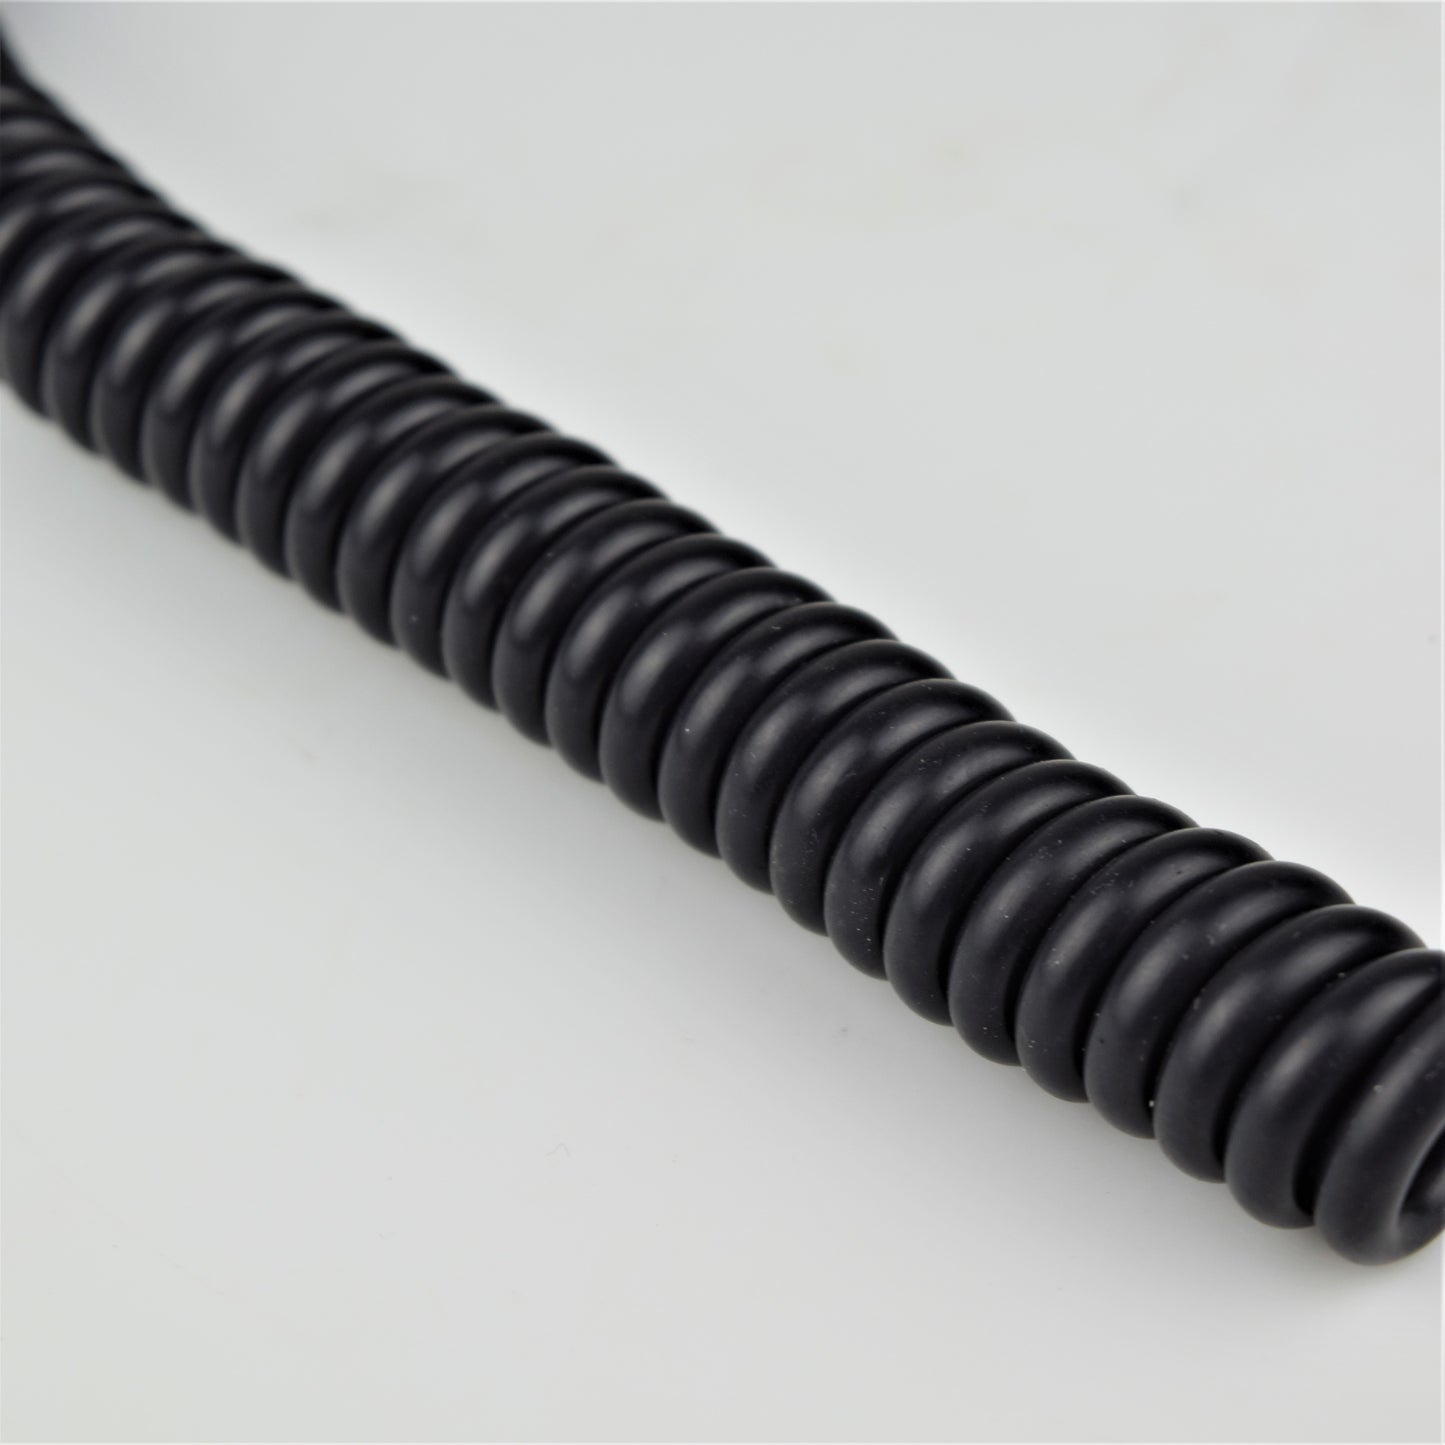 Cord - Handset - Black - Vinyl - Round - Curly - 3 Conductor - spade terminals